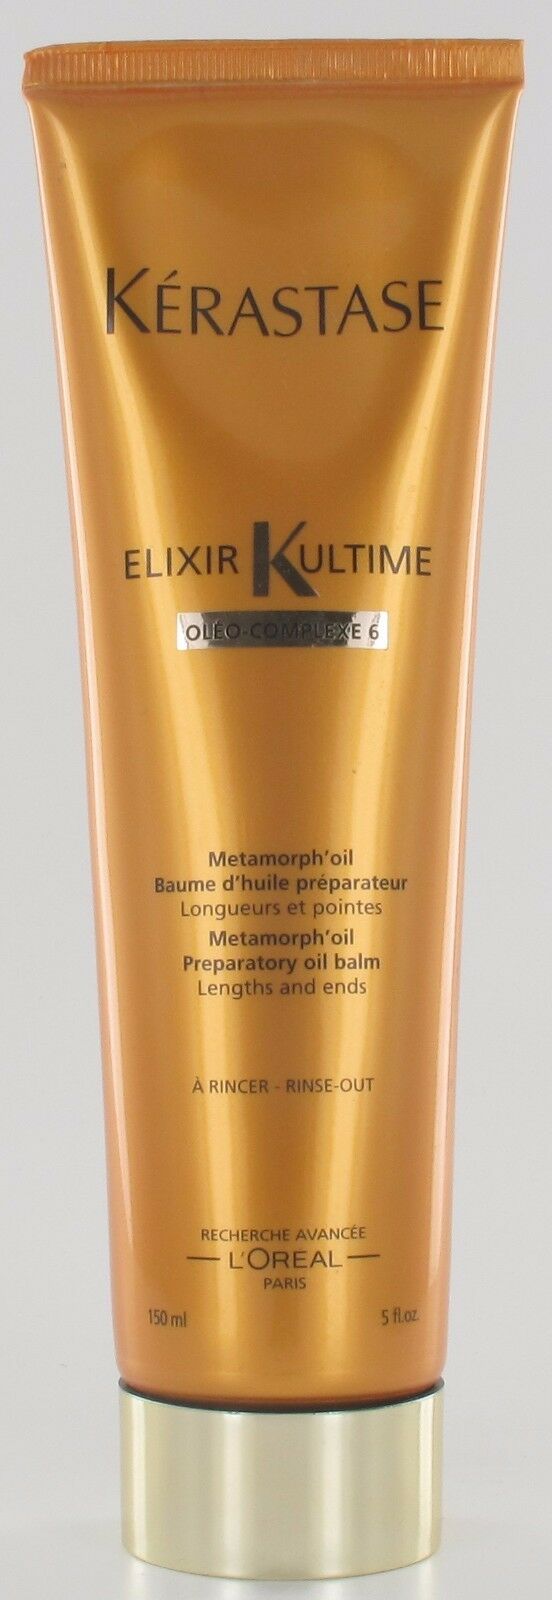 Kerastase Elixir Ultime Metamorph'oil Preparatory Oil Balm 5oz